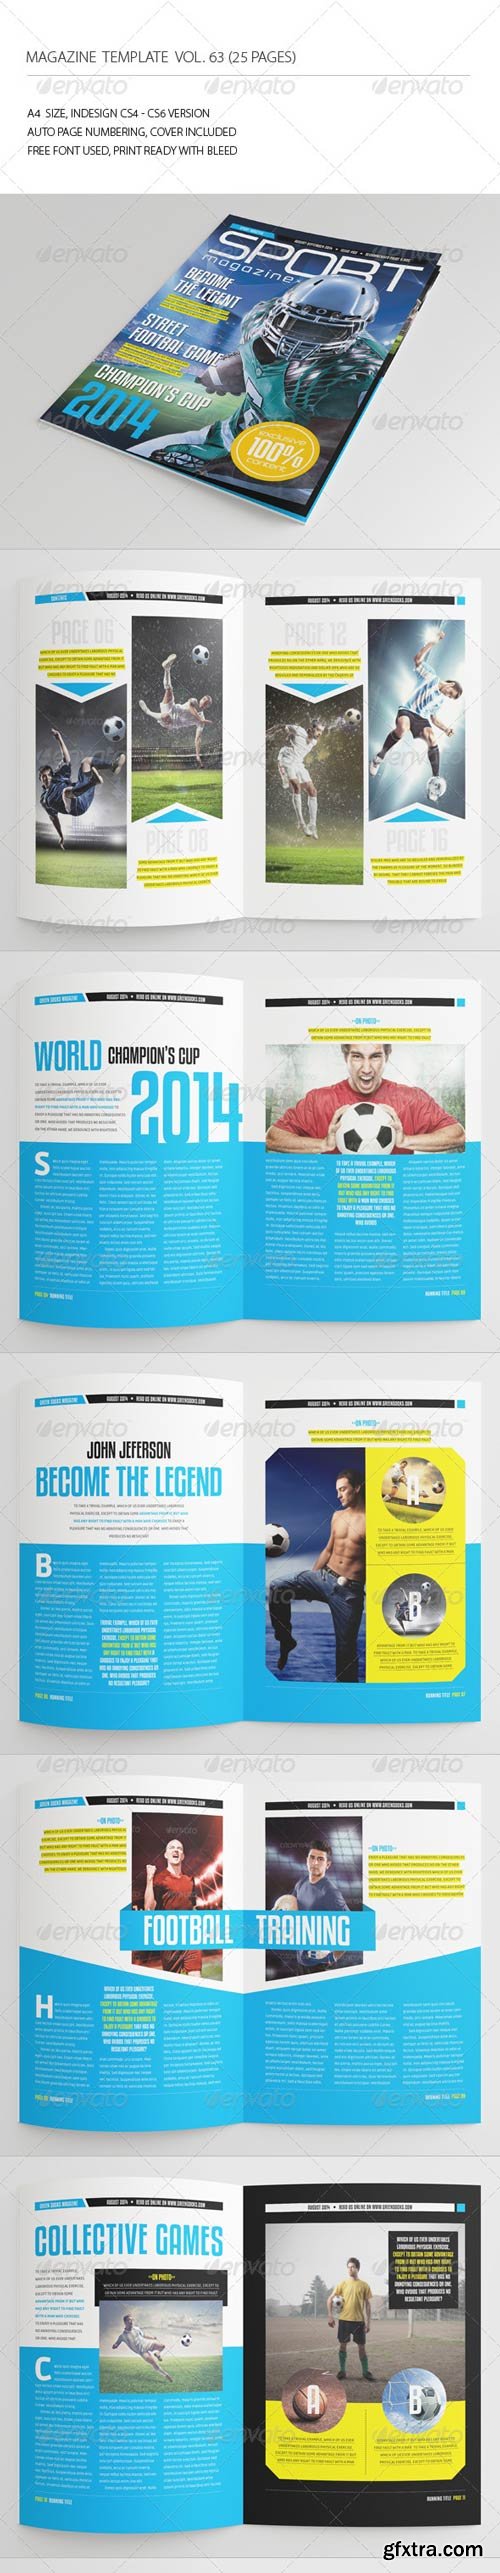 GraphicRiver - 25 Pages Sport Magazine Vol63 - 8083034